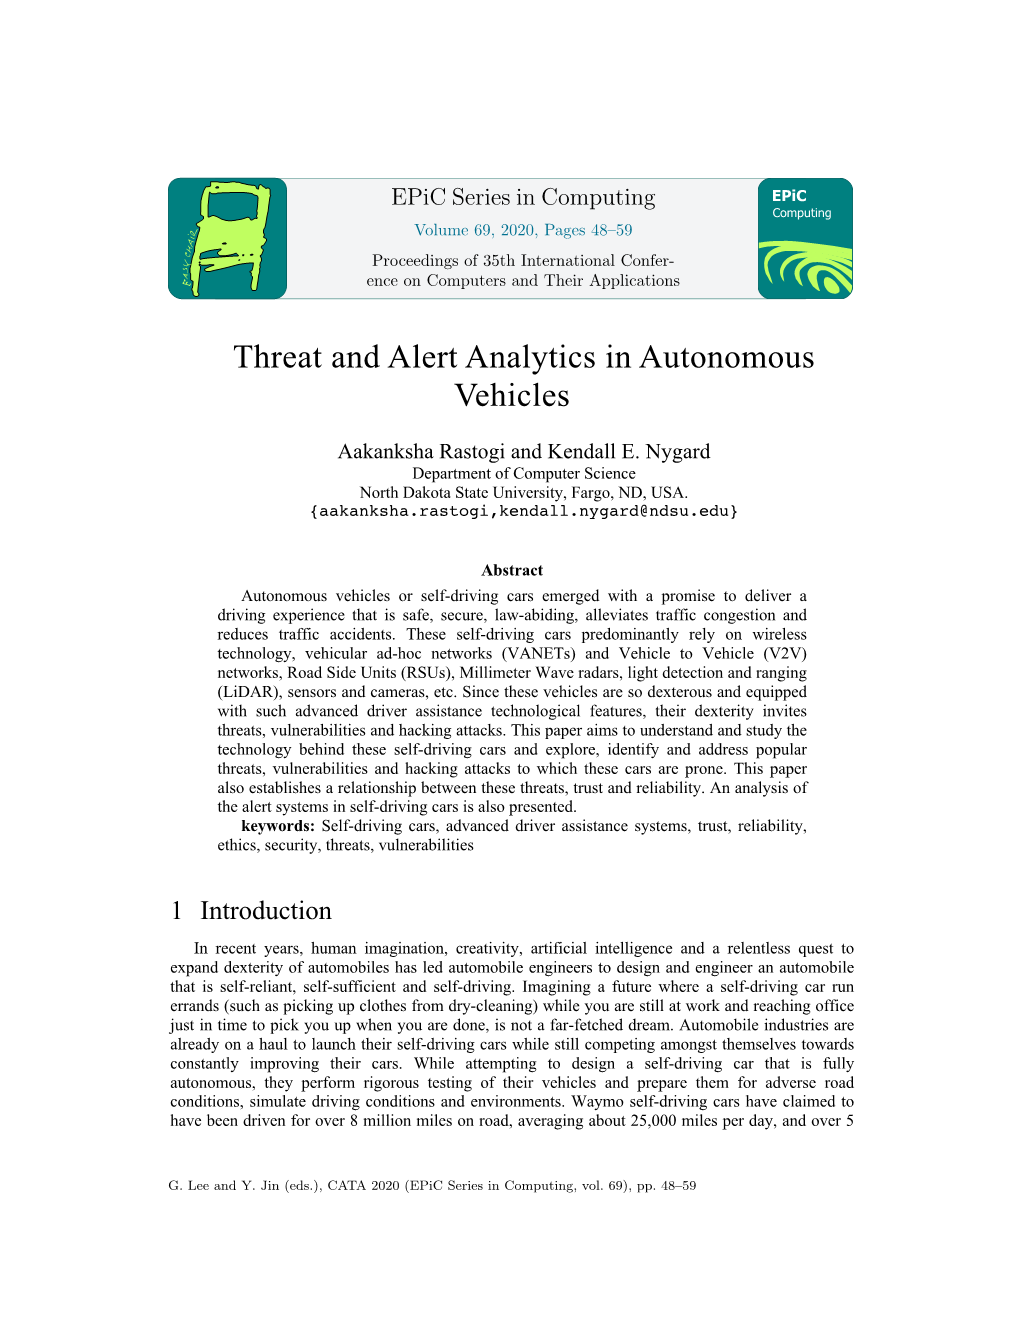 Threat and Alert Analytics in Autonomous Vehicles